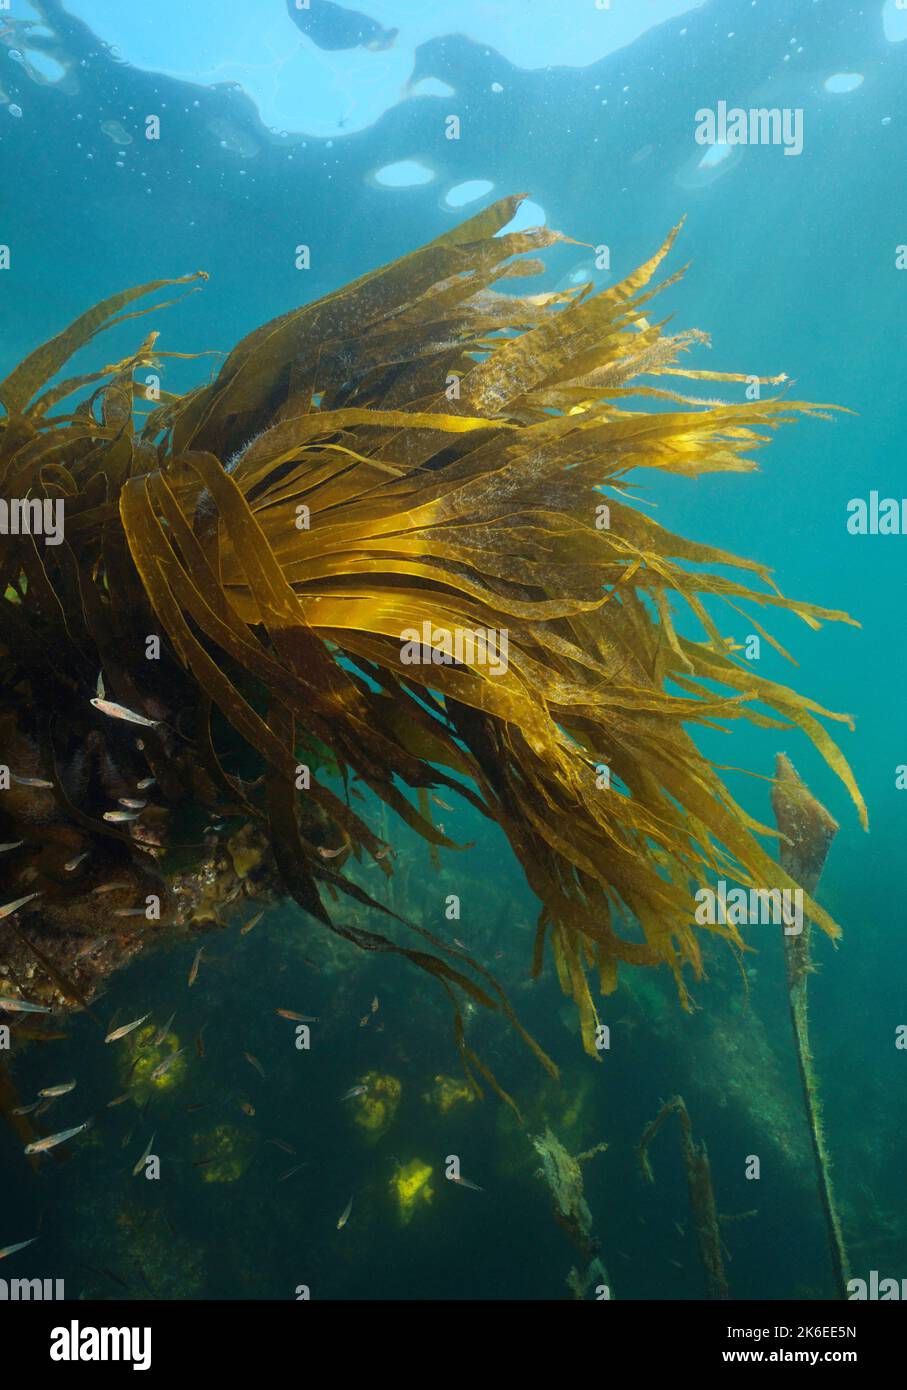 Laminaria Seetang Laub, Braunalge unter Wasser im Ozean, Ostatlantik, Spanien, Galizien Stockfoto